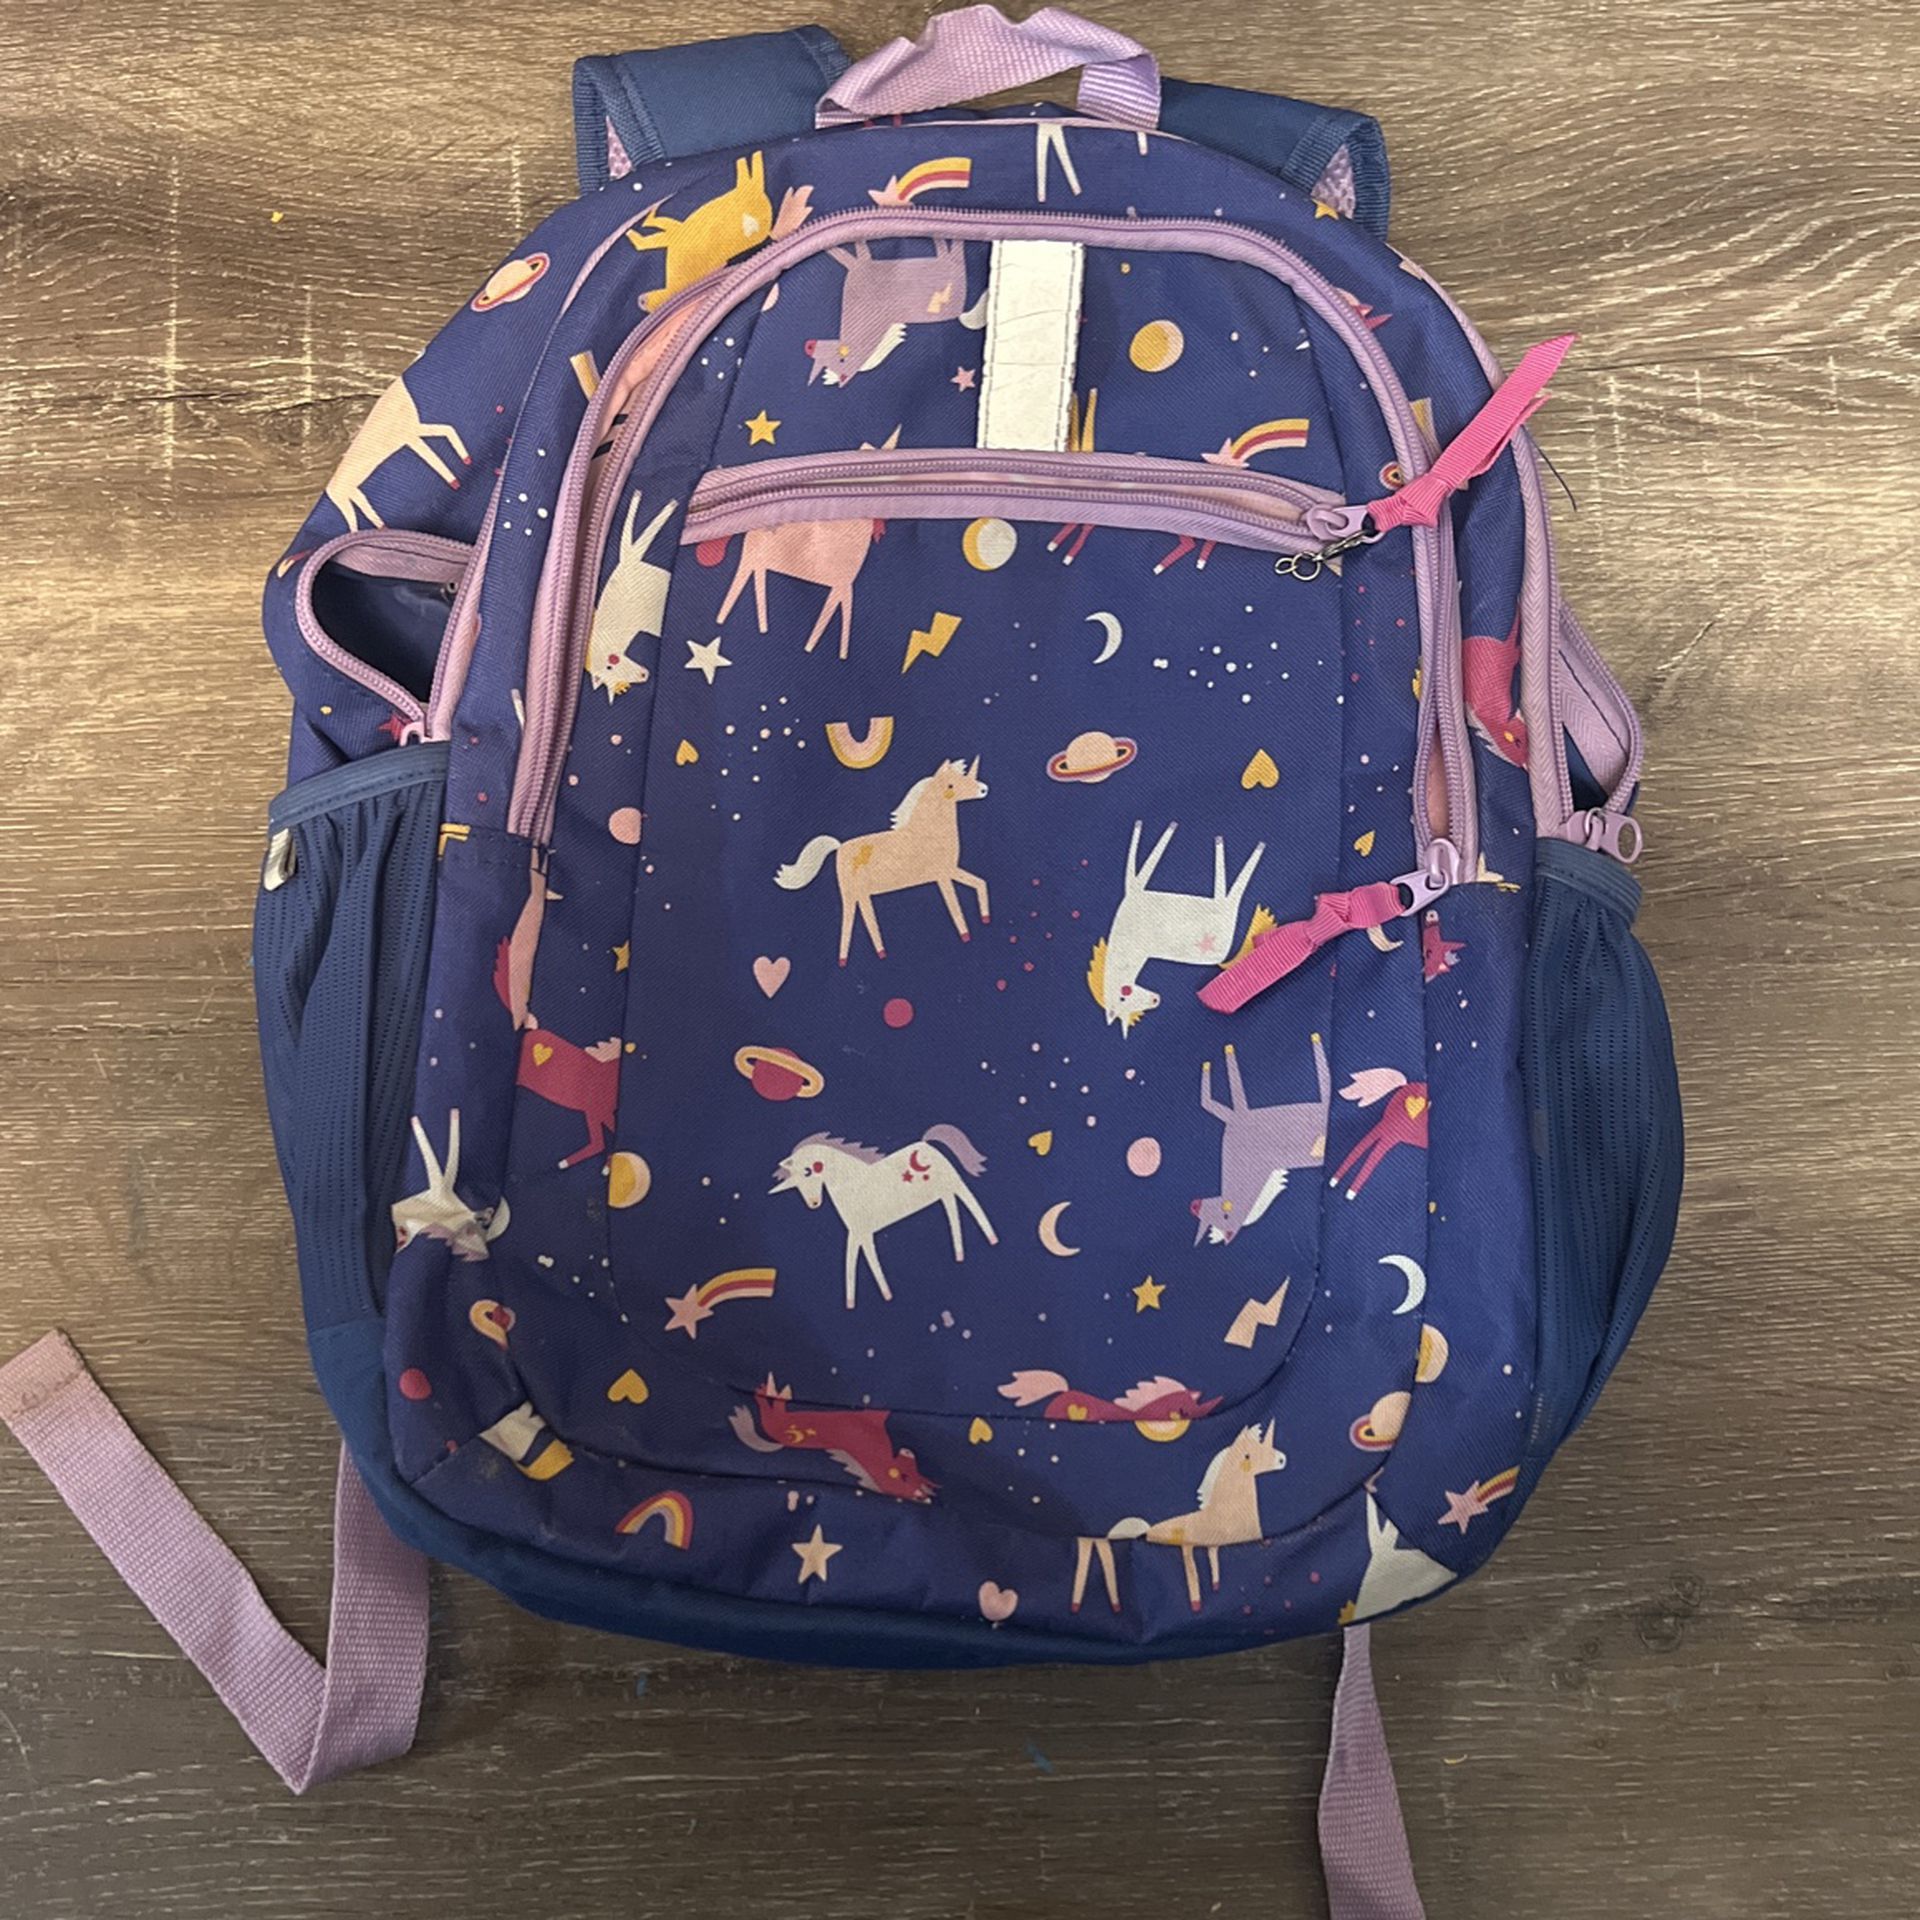 Girls Backpack $10